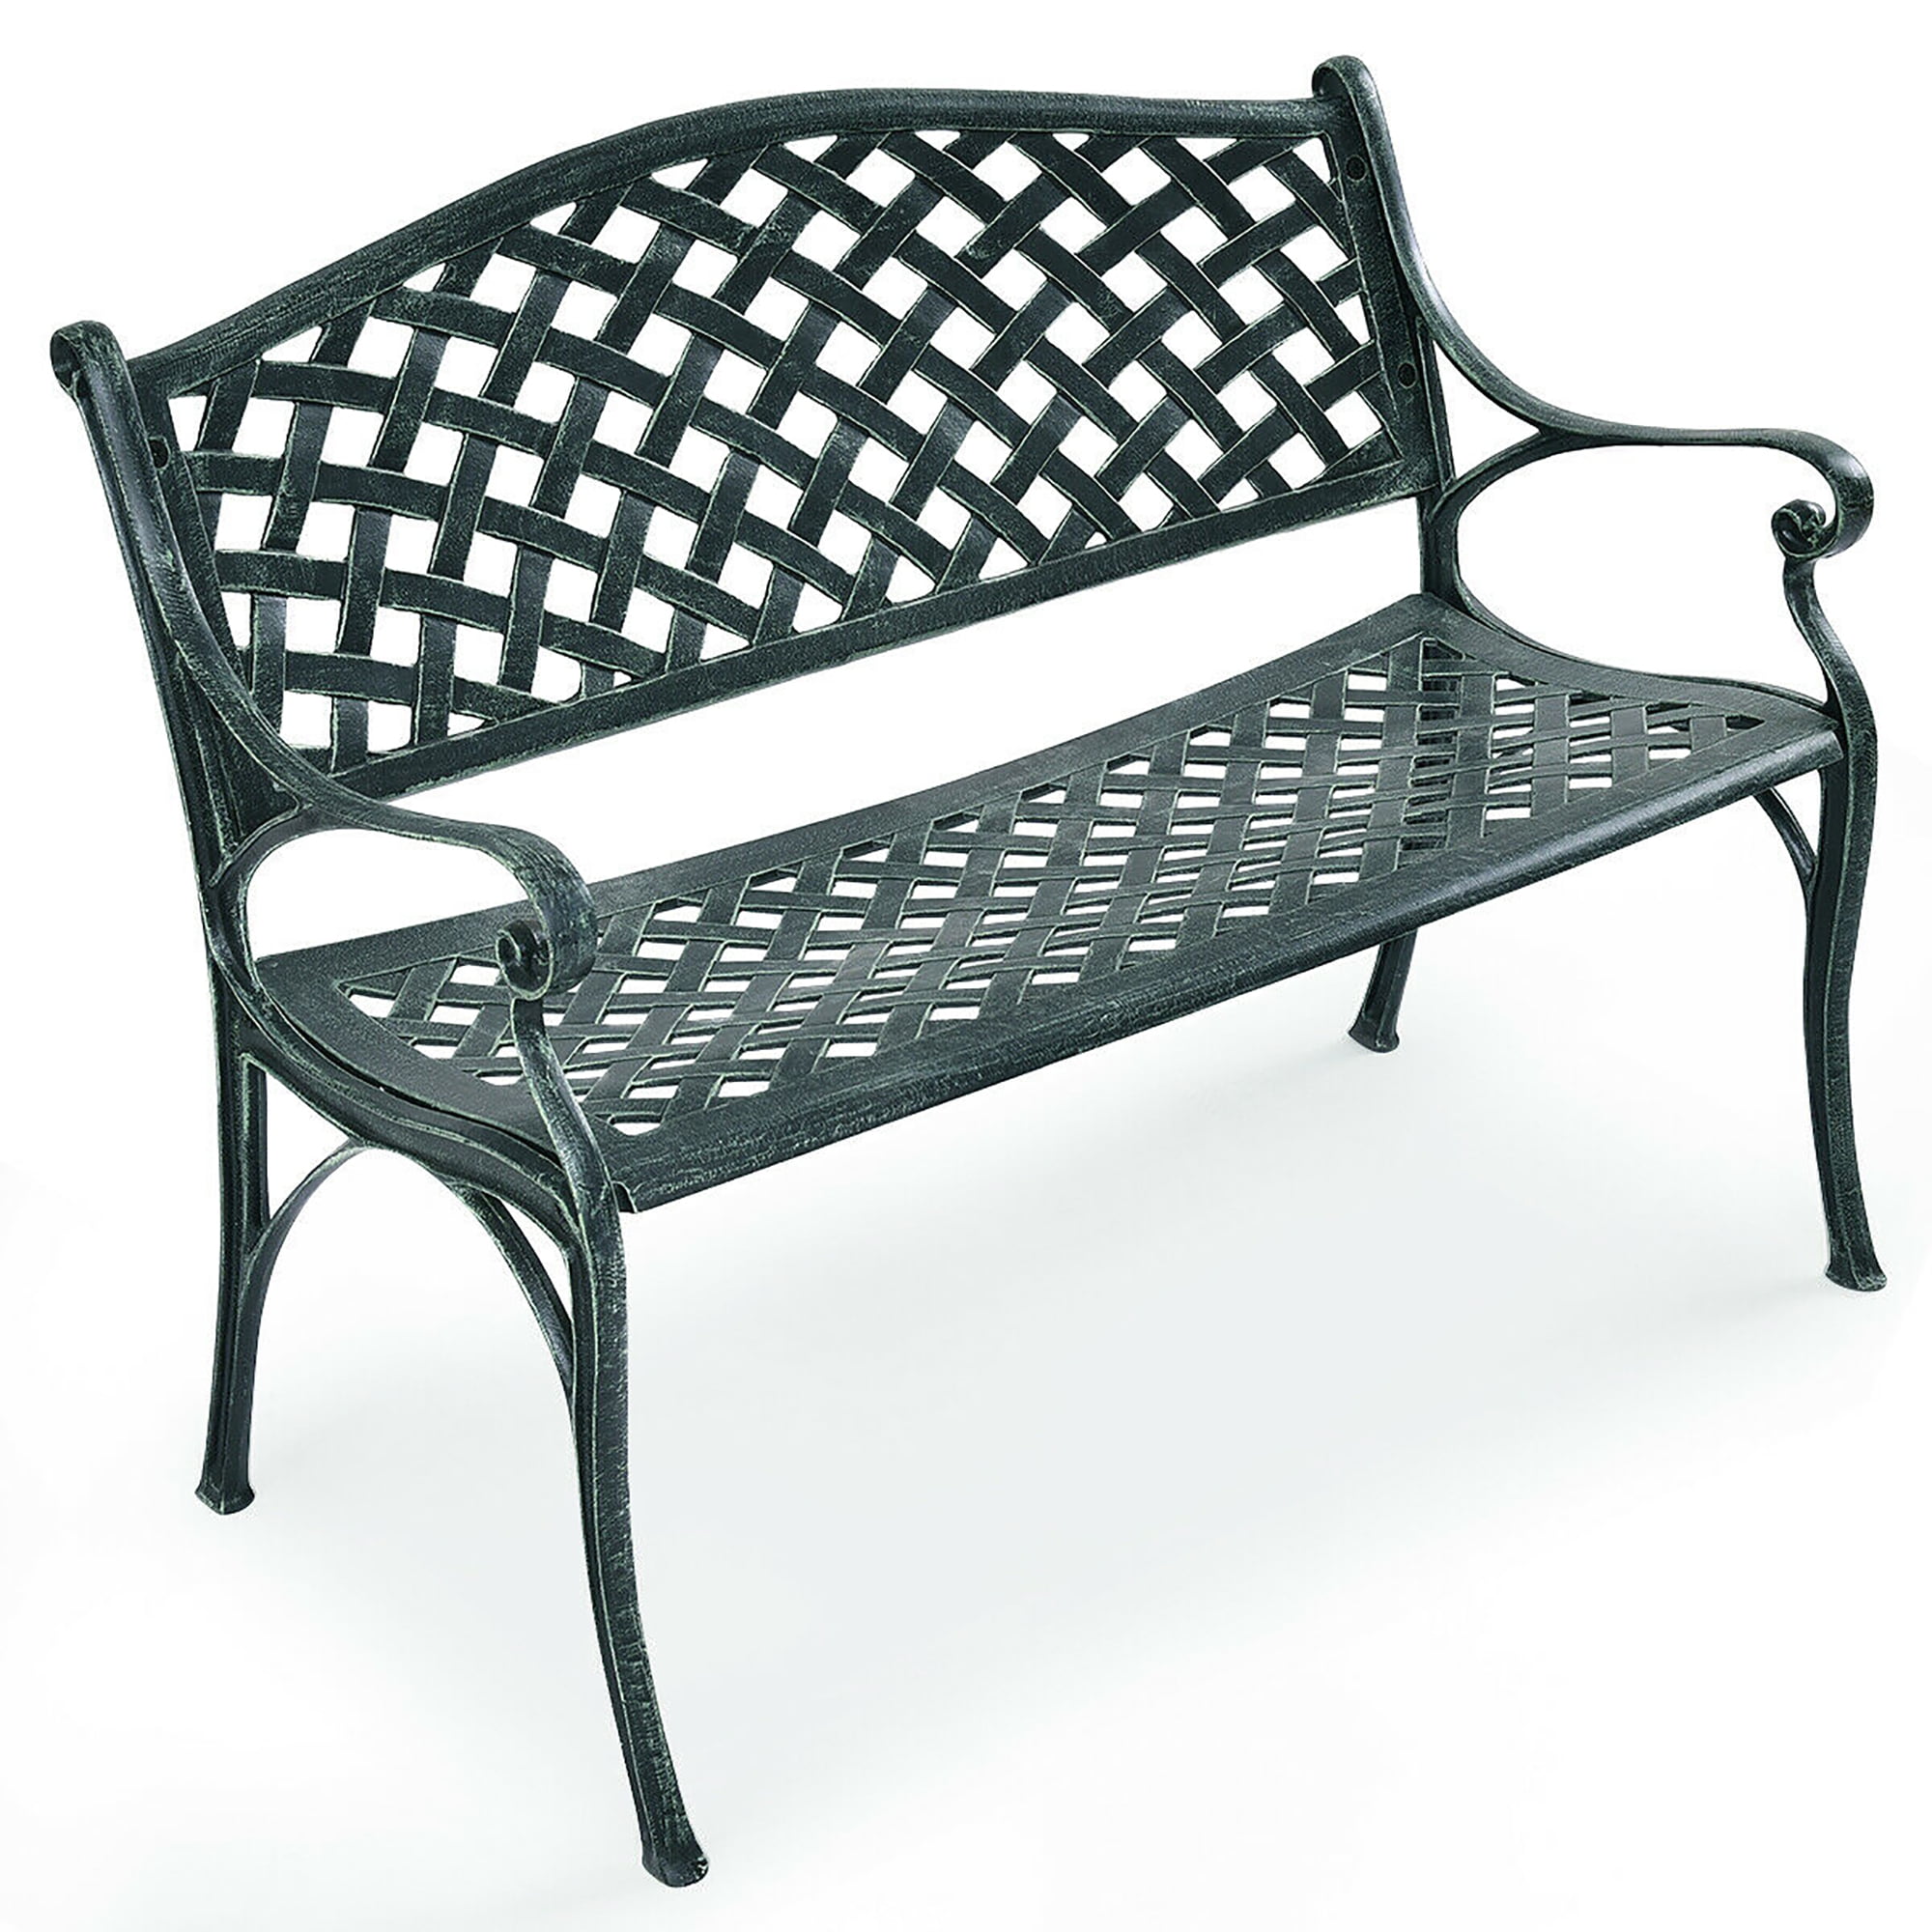 costway 40'' outdoor antique garden bench aluminum frame seats chair